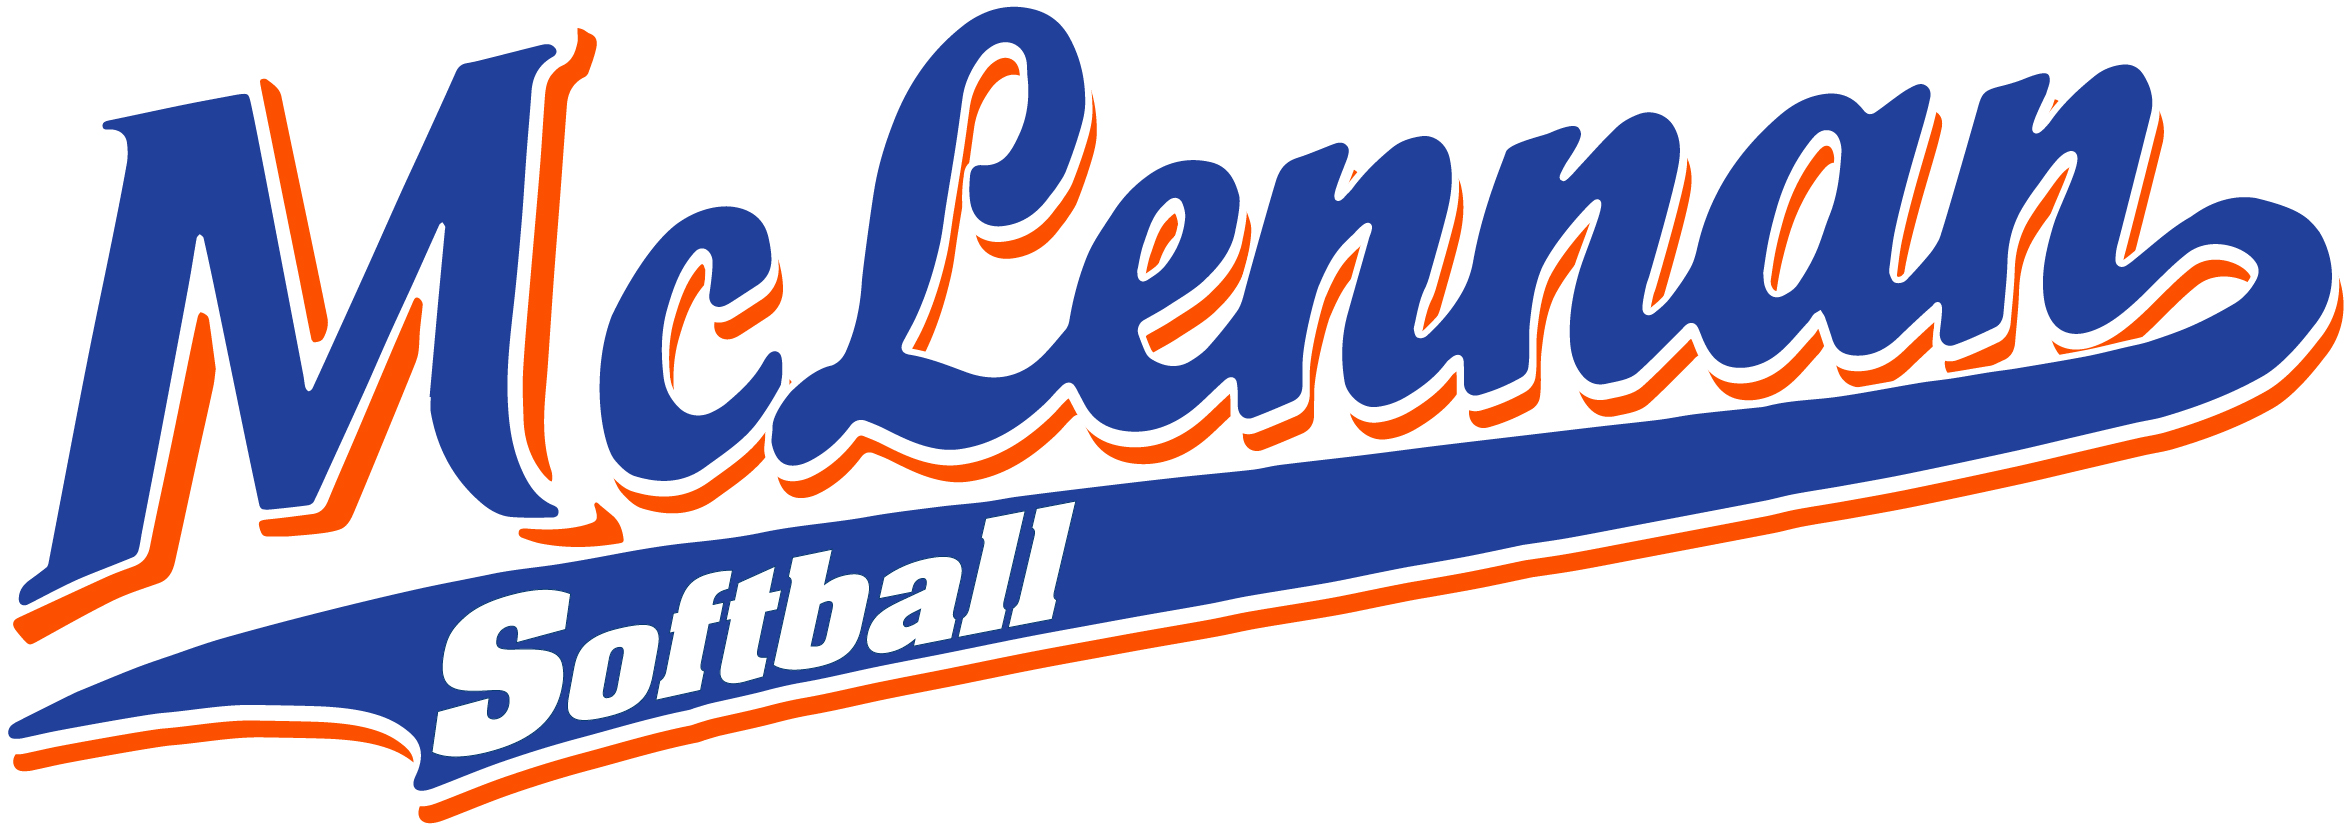 2018 McLennan Community College Softball Challenge - eTeamSponsor